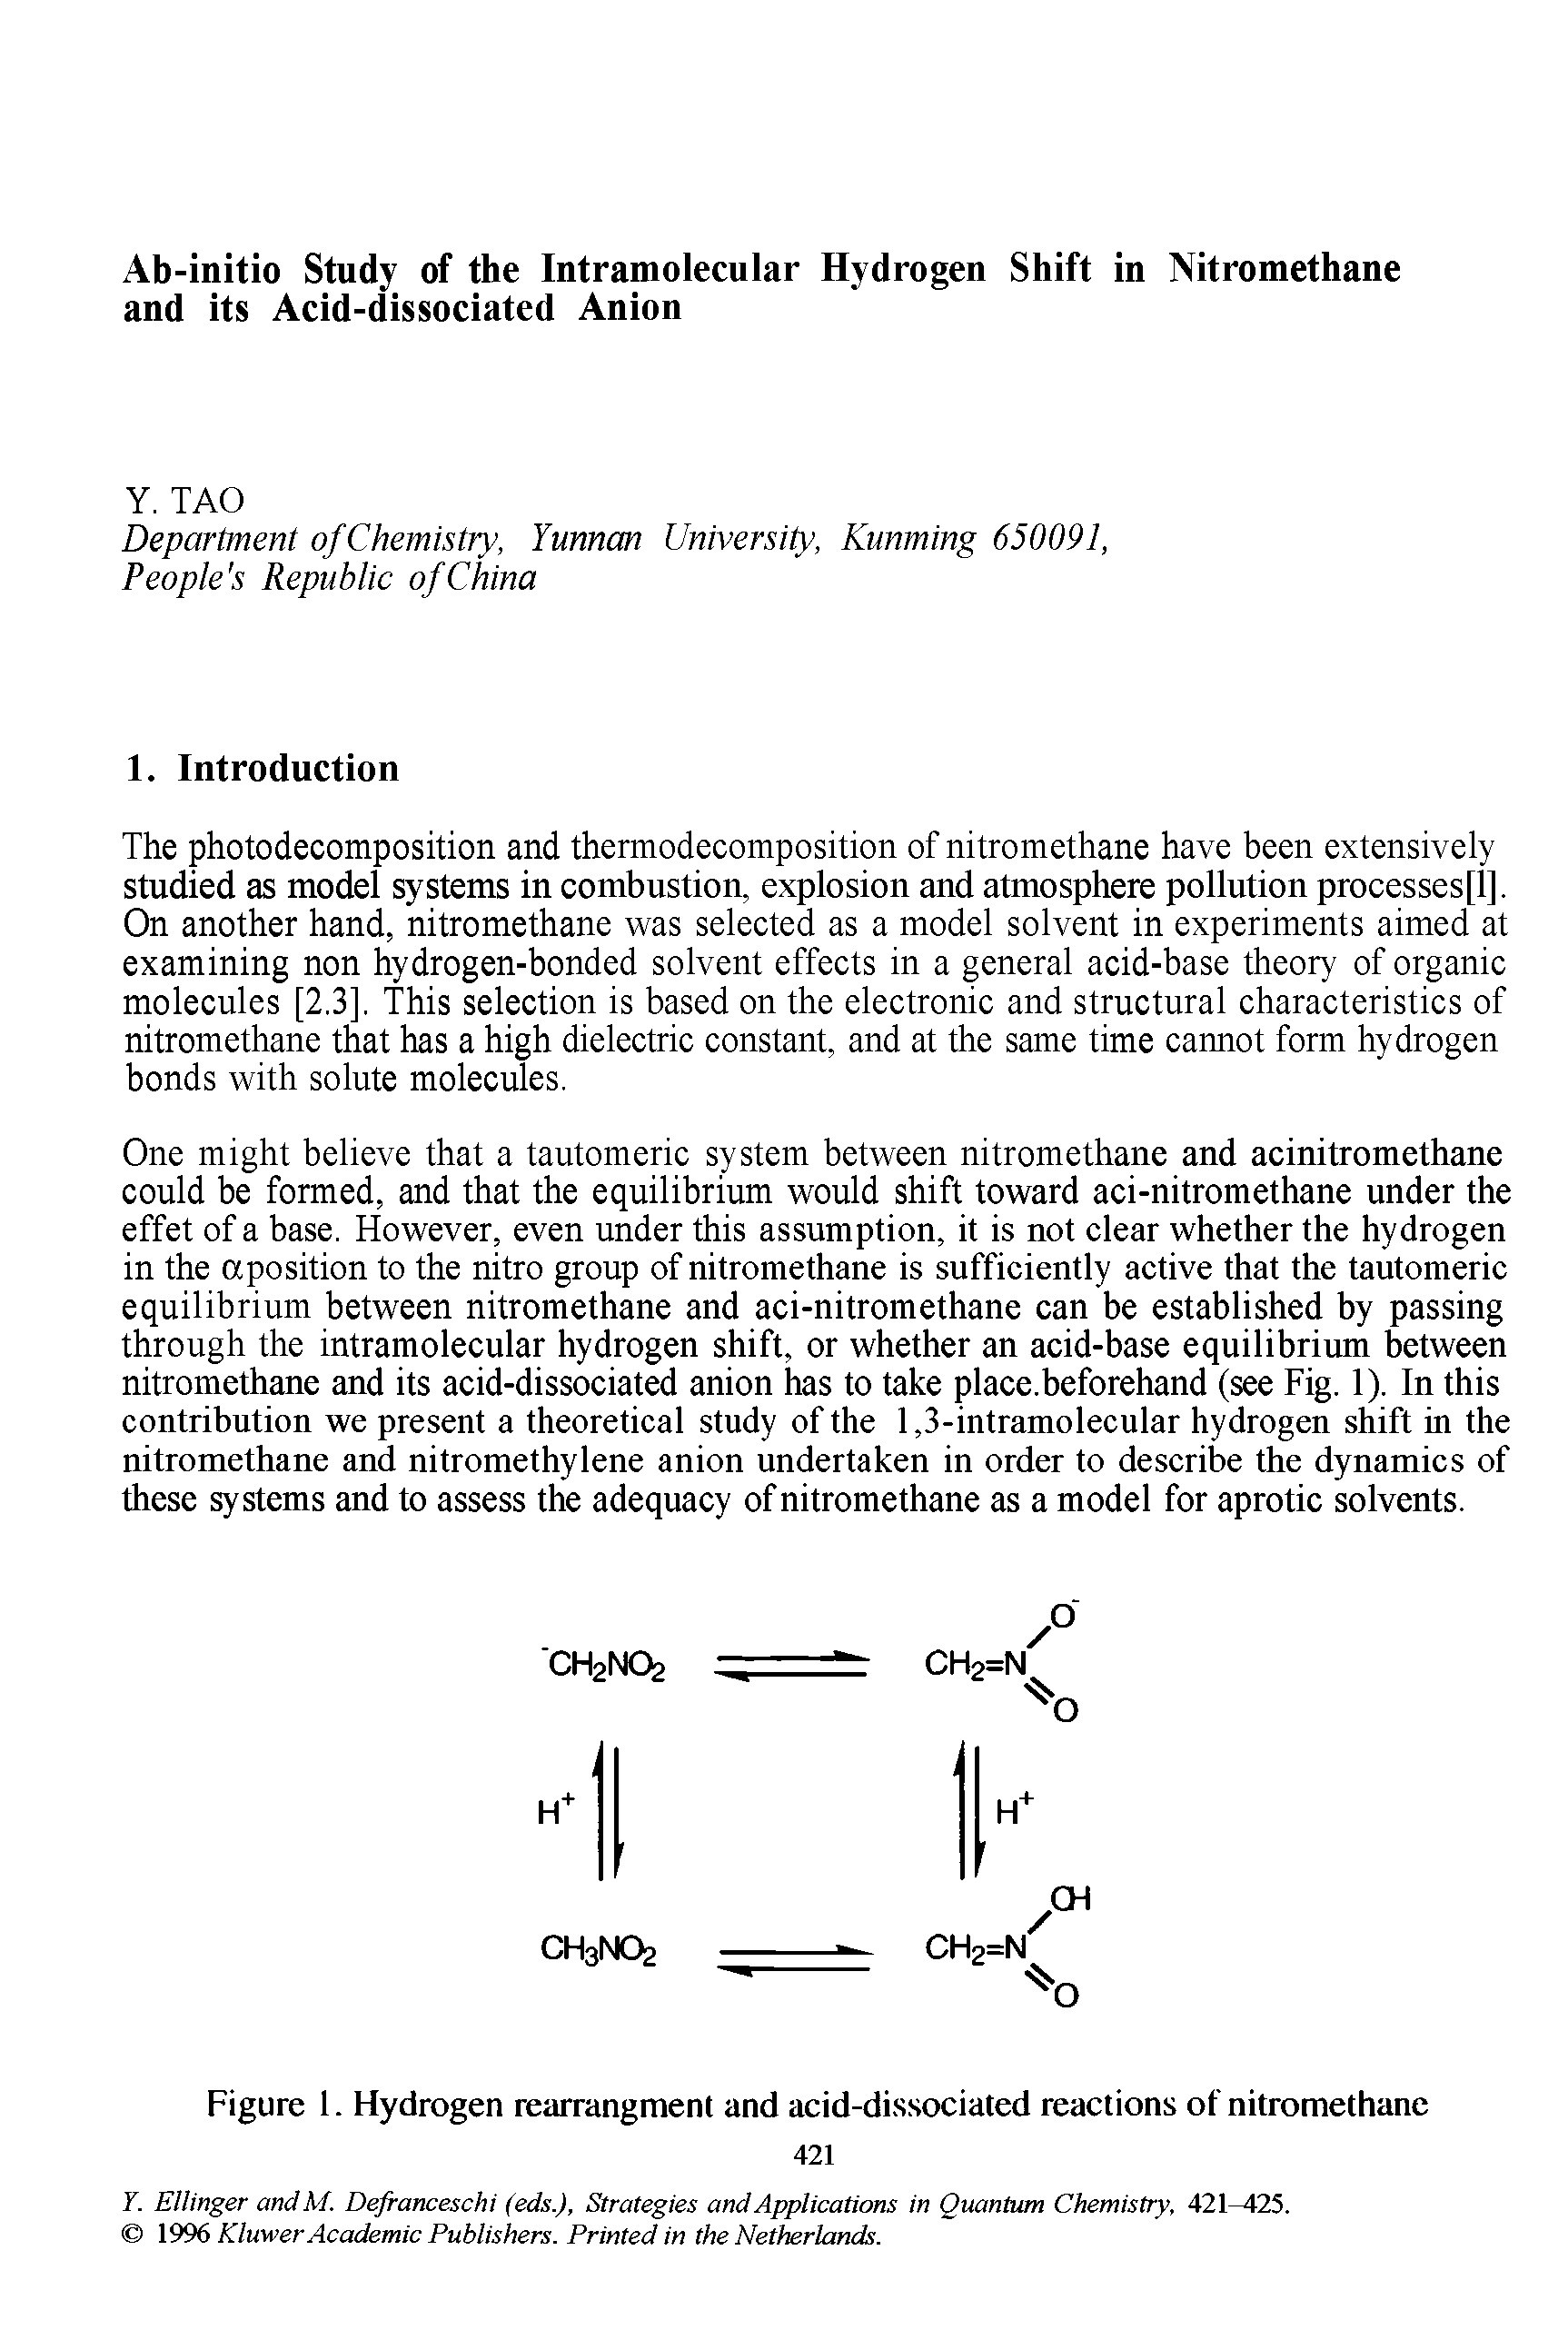 Figure 1. Hydrogen rearrangment and acid-dissociated reactions of nitromethane...